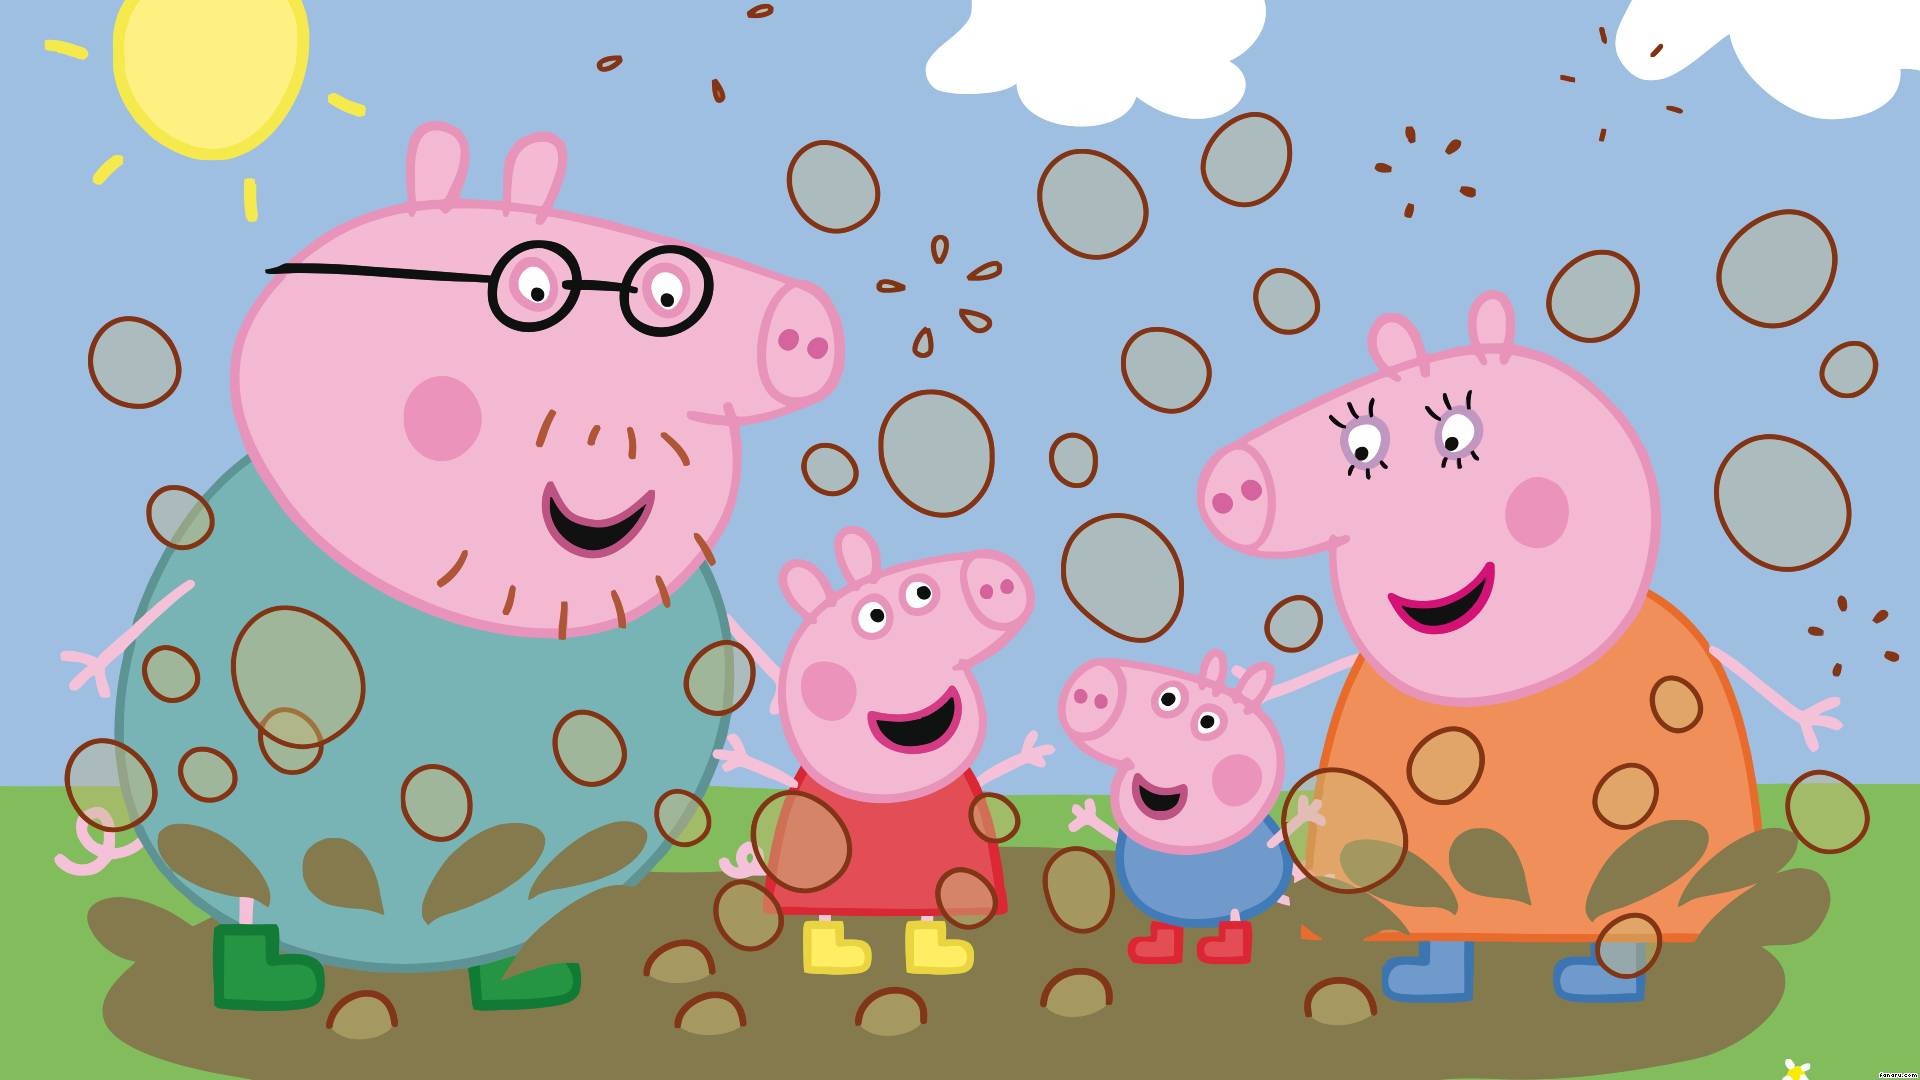 Fondos de pantalla de Peppa Pig para descargar